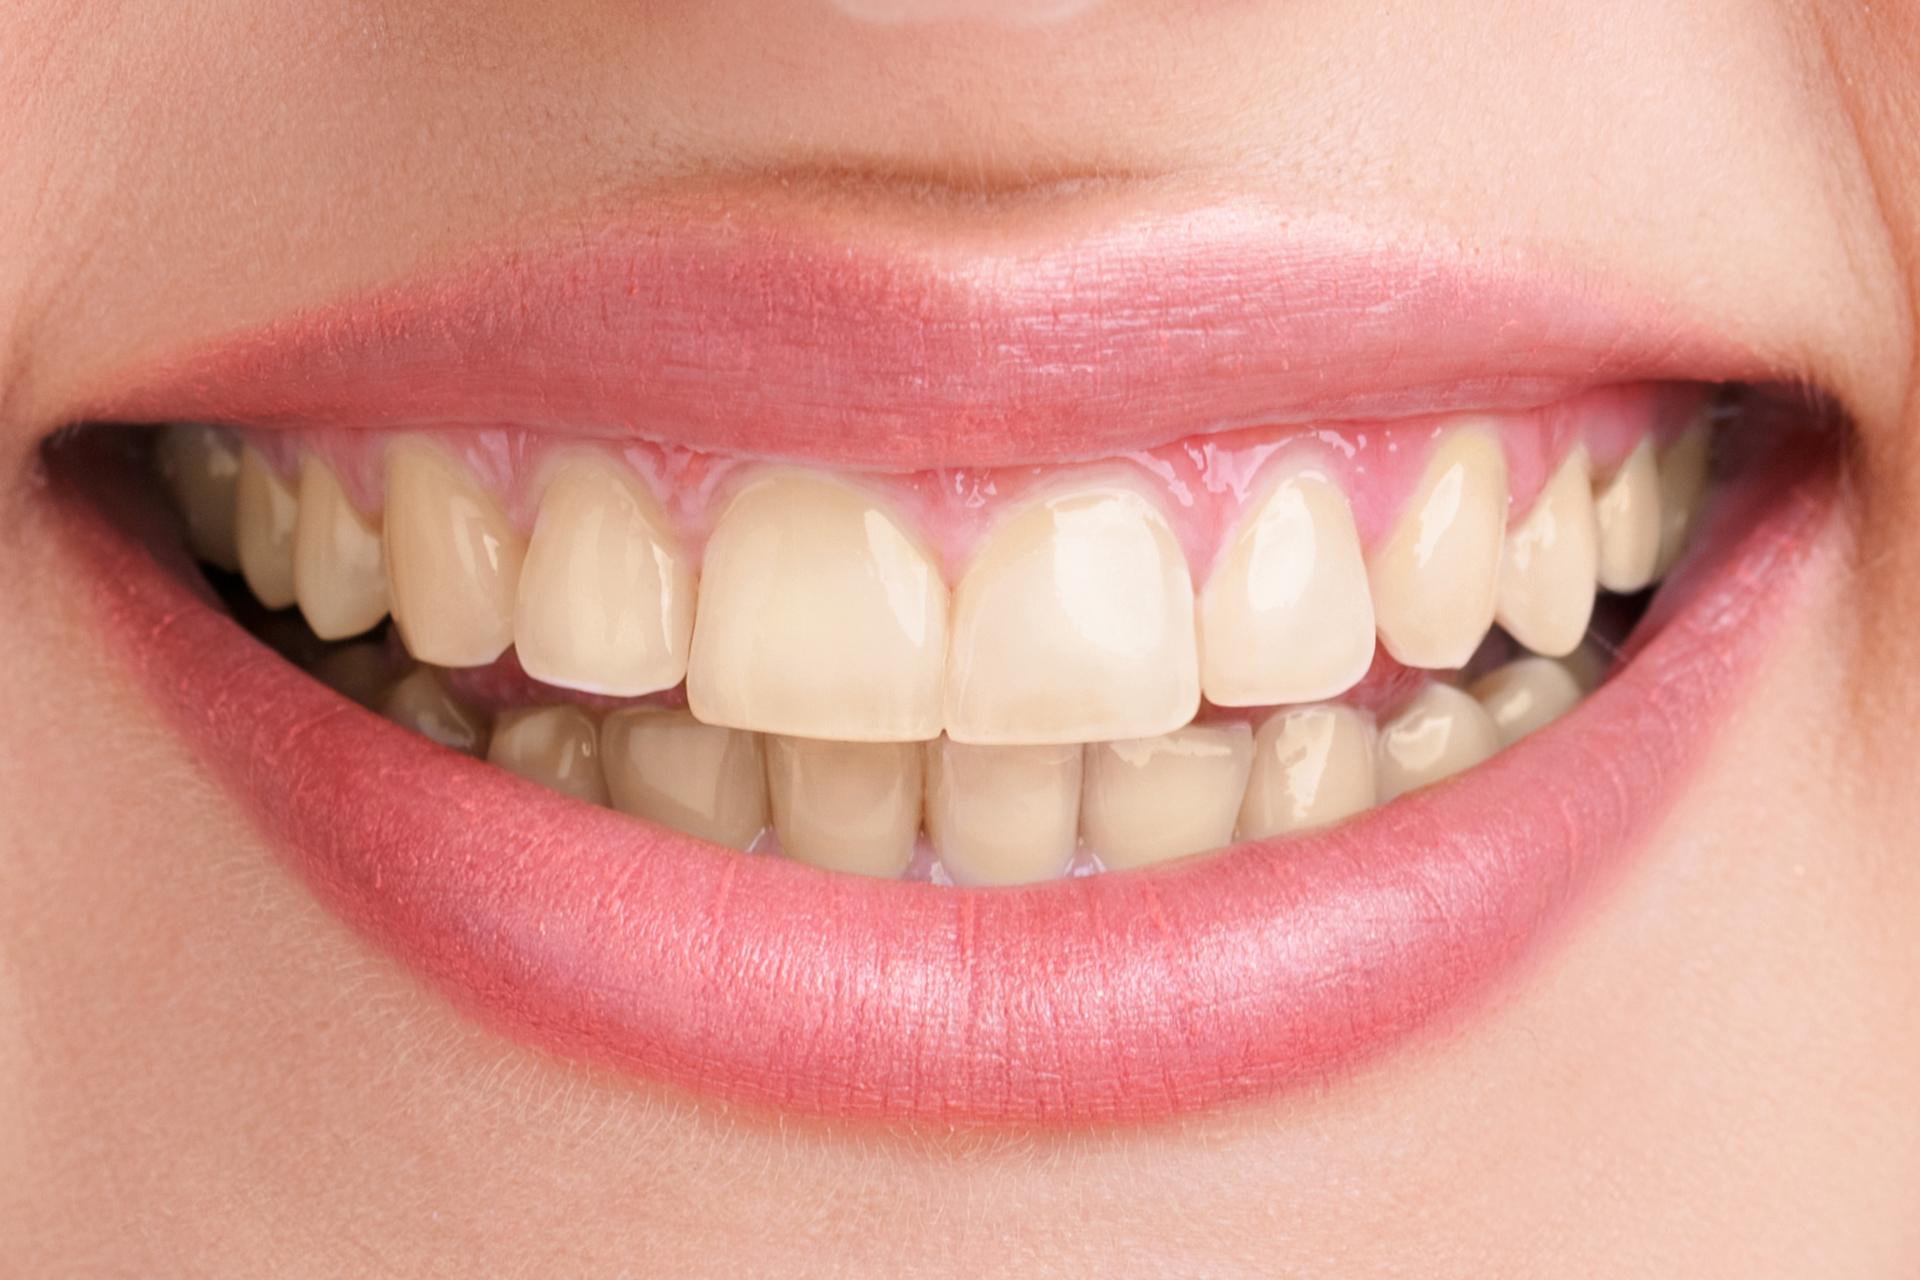 yellow teeth needing teeth whitening dental care